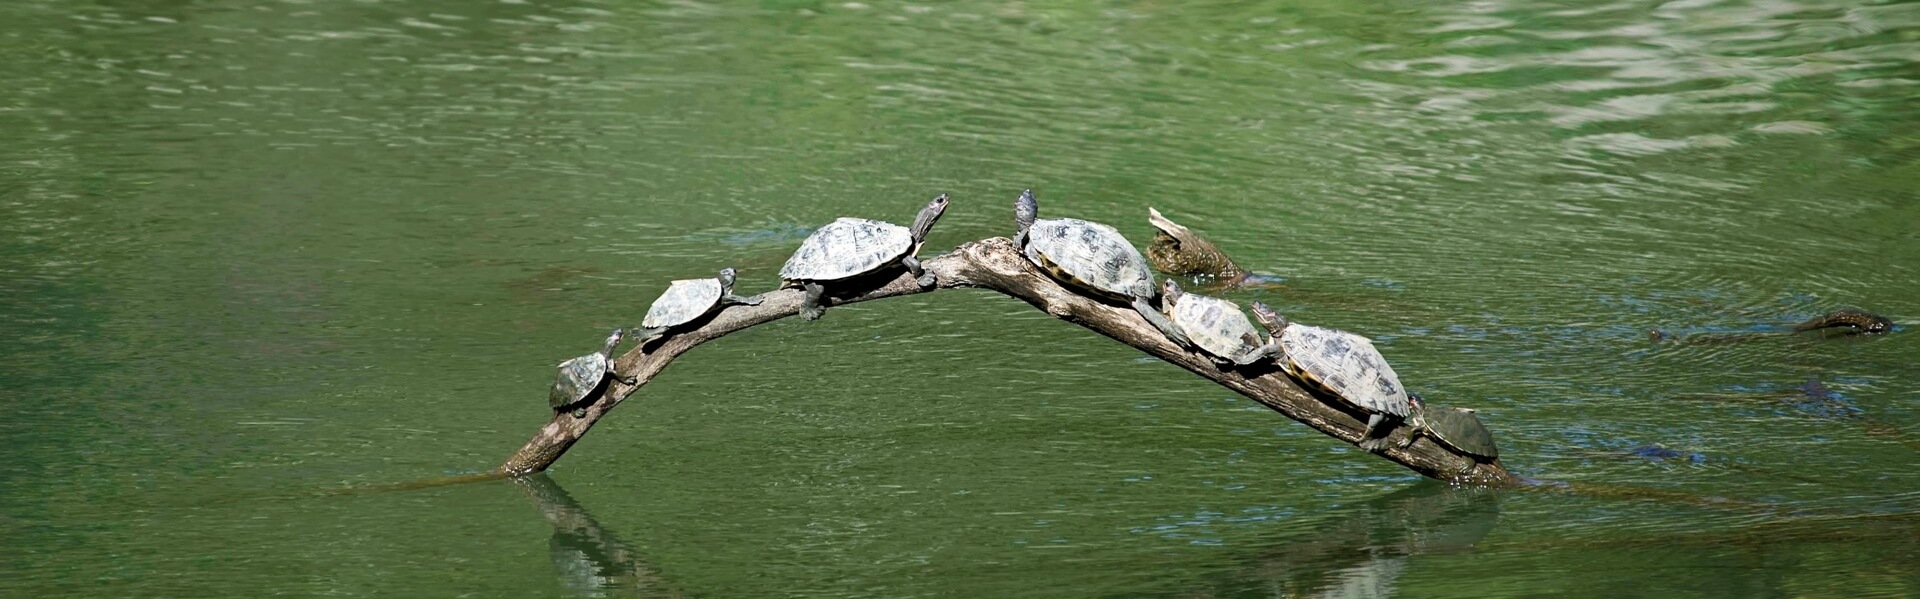 Baruah turtles